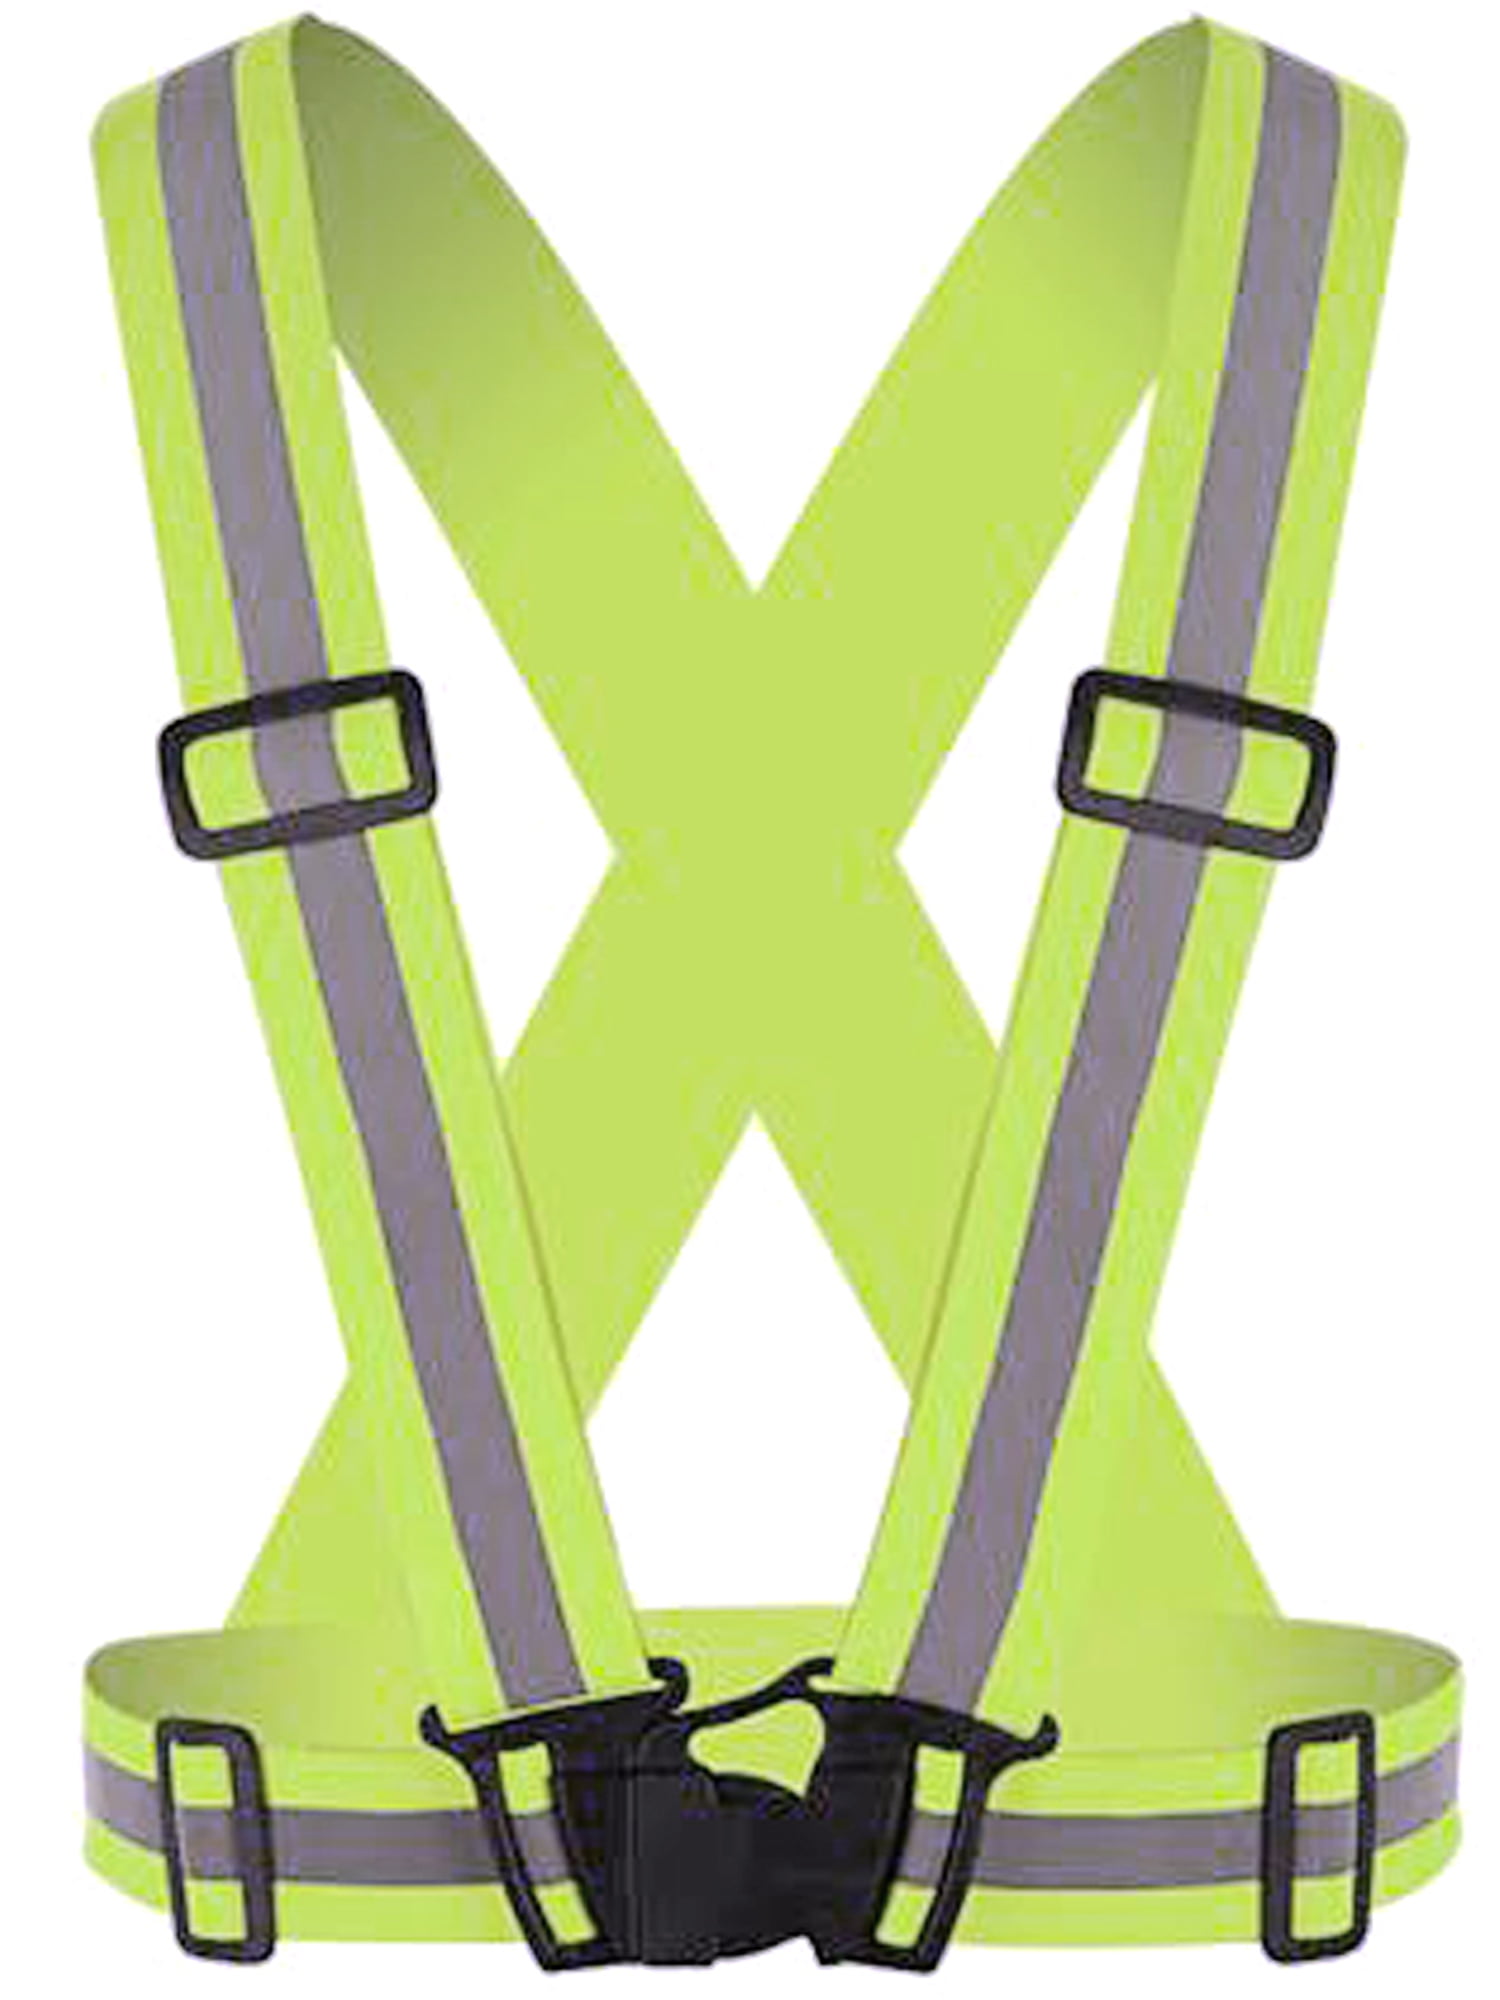 Details about   Hi Viz Vest High Vis Safety Visibility Waistcoat Reflective Belt Workout Strap 